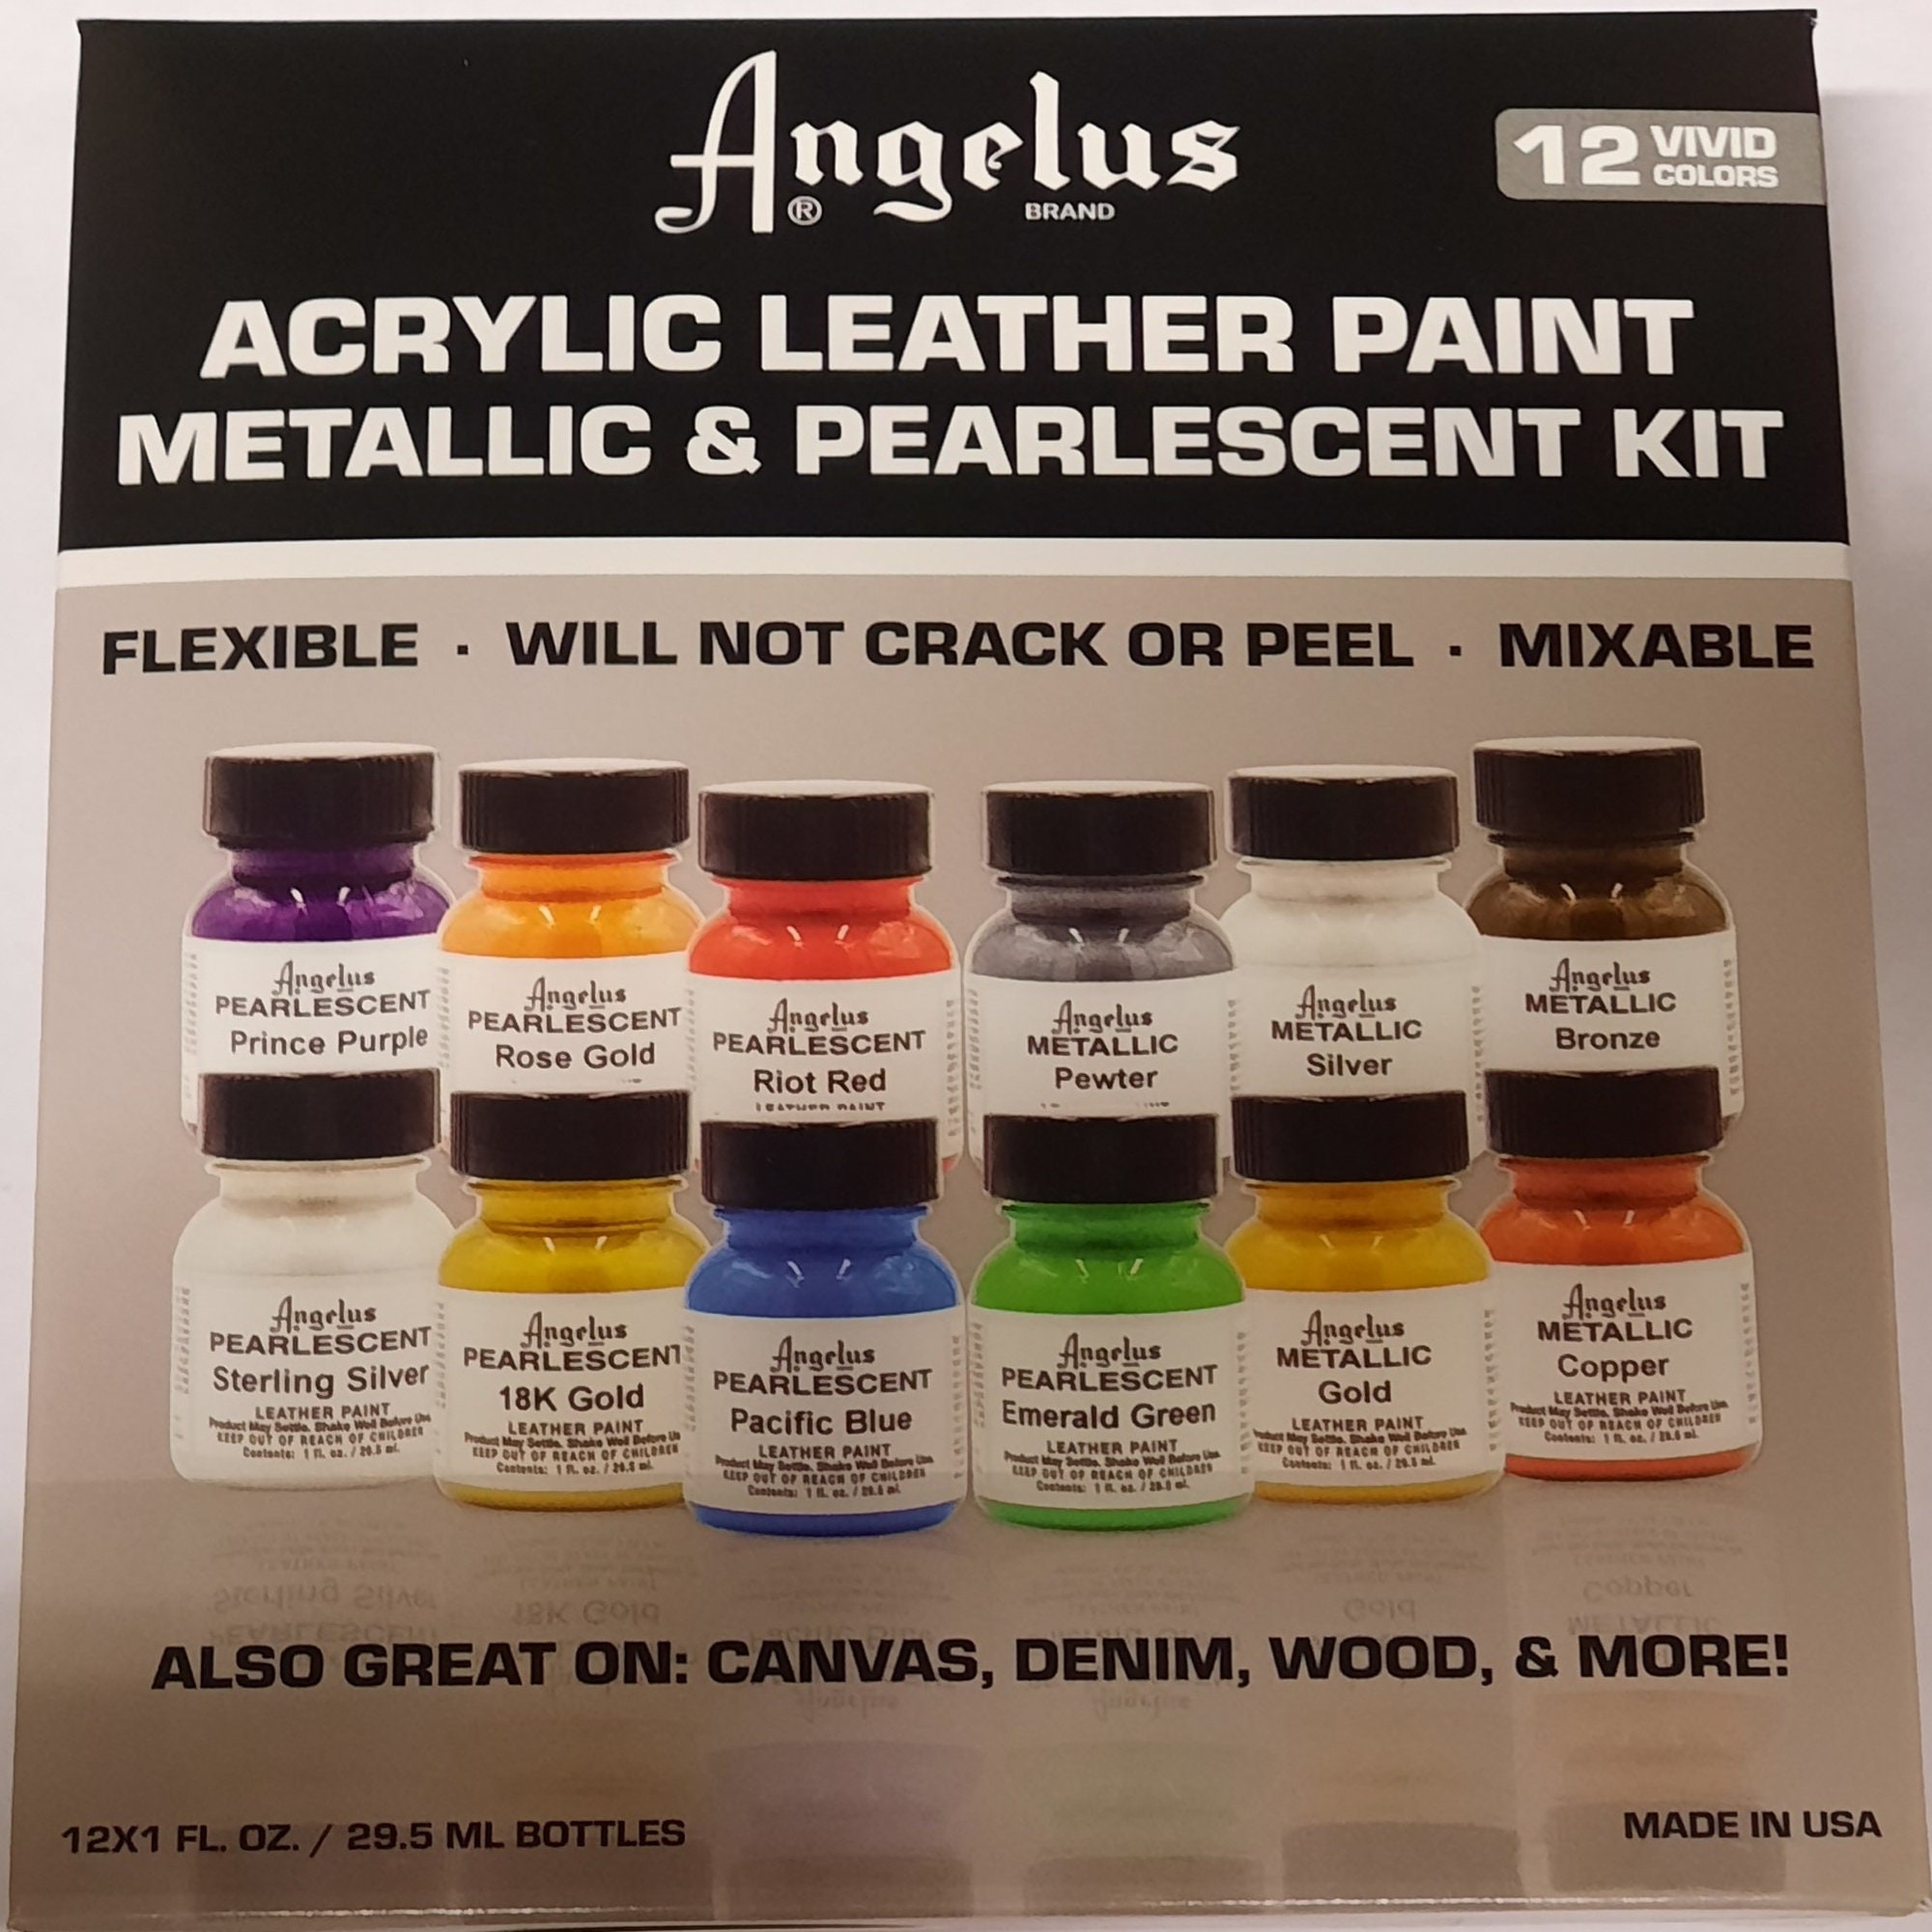 Angelus Leather Preparer Deglazer Lustre Cream Neutral Lotion